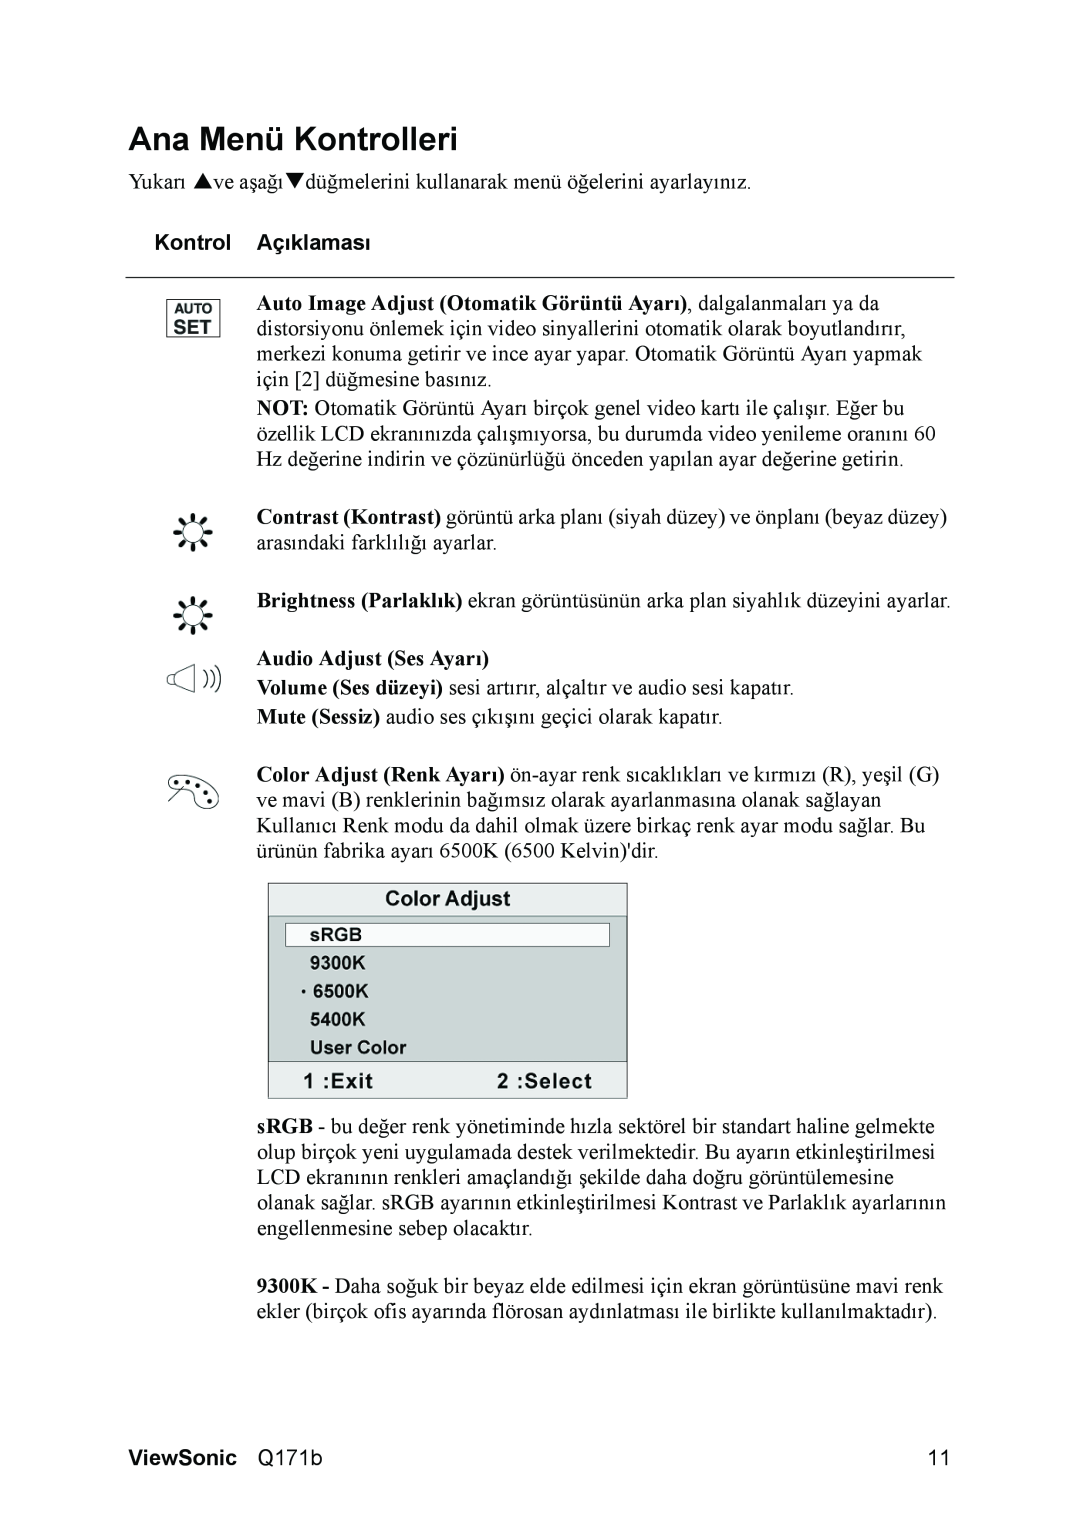 ViewSonic Q171B manual Ana Menü Kontrolleri, Kontrol Açıklaması, ViewSonic Q171b 